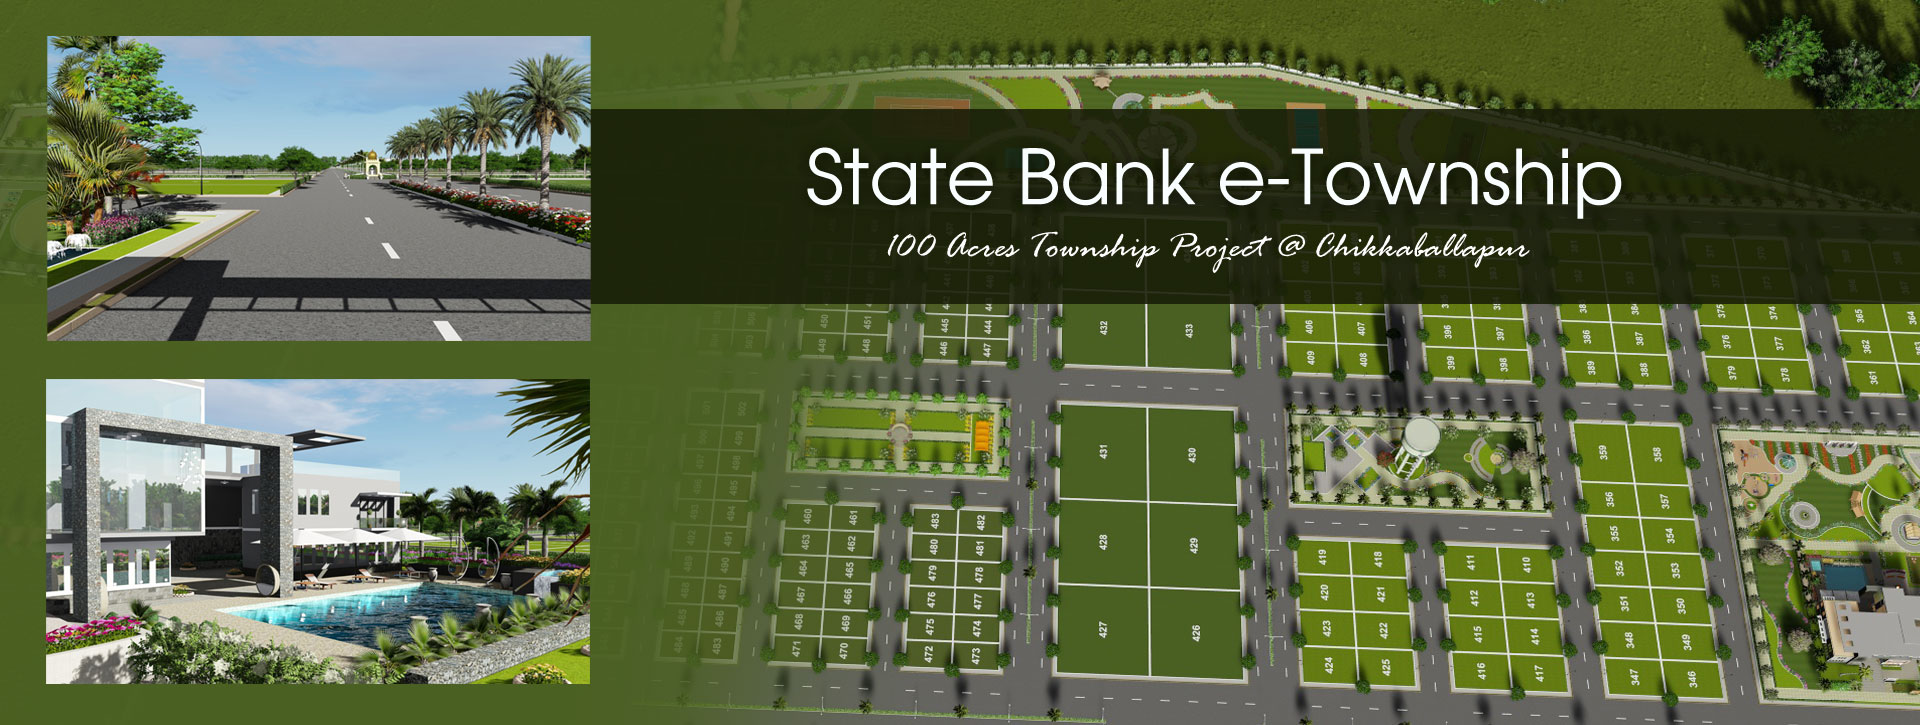 State Bank e-Township, 100 Acre Township Project near Chikkaballapur